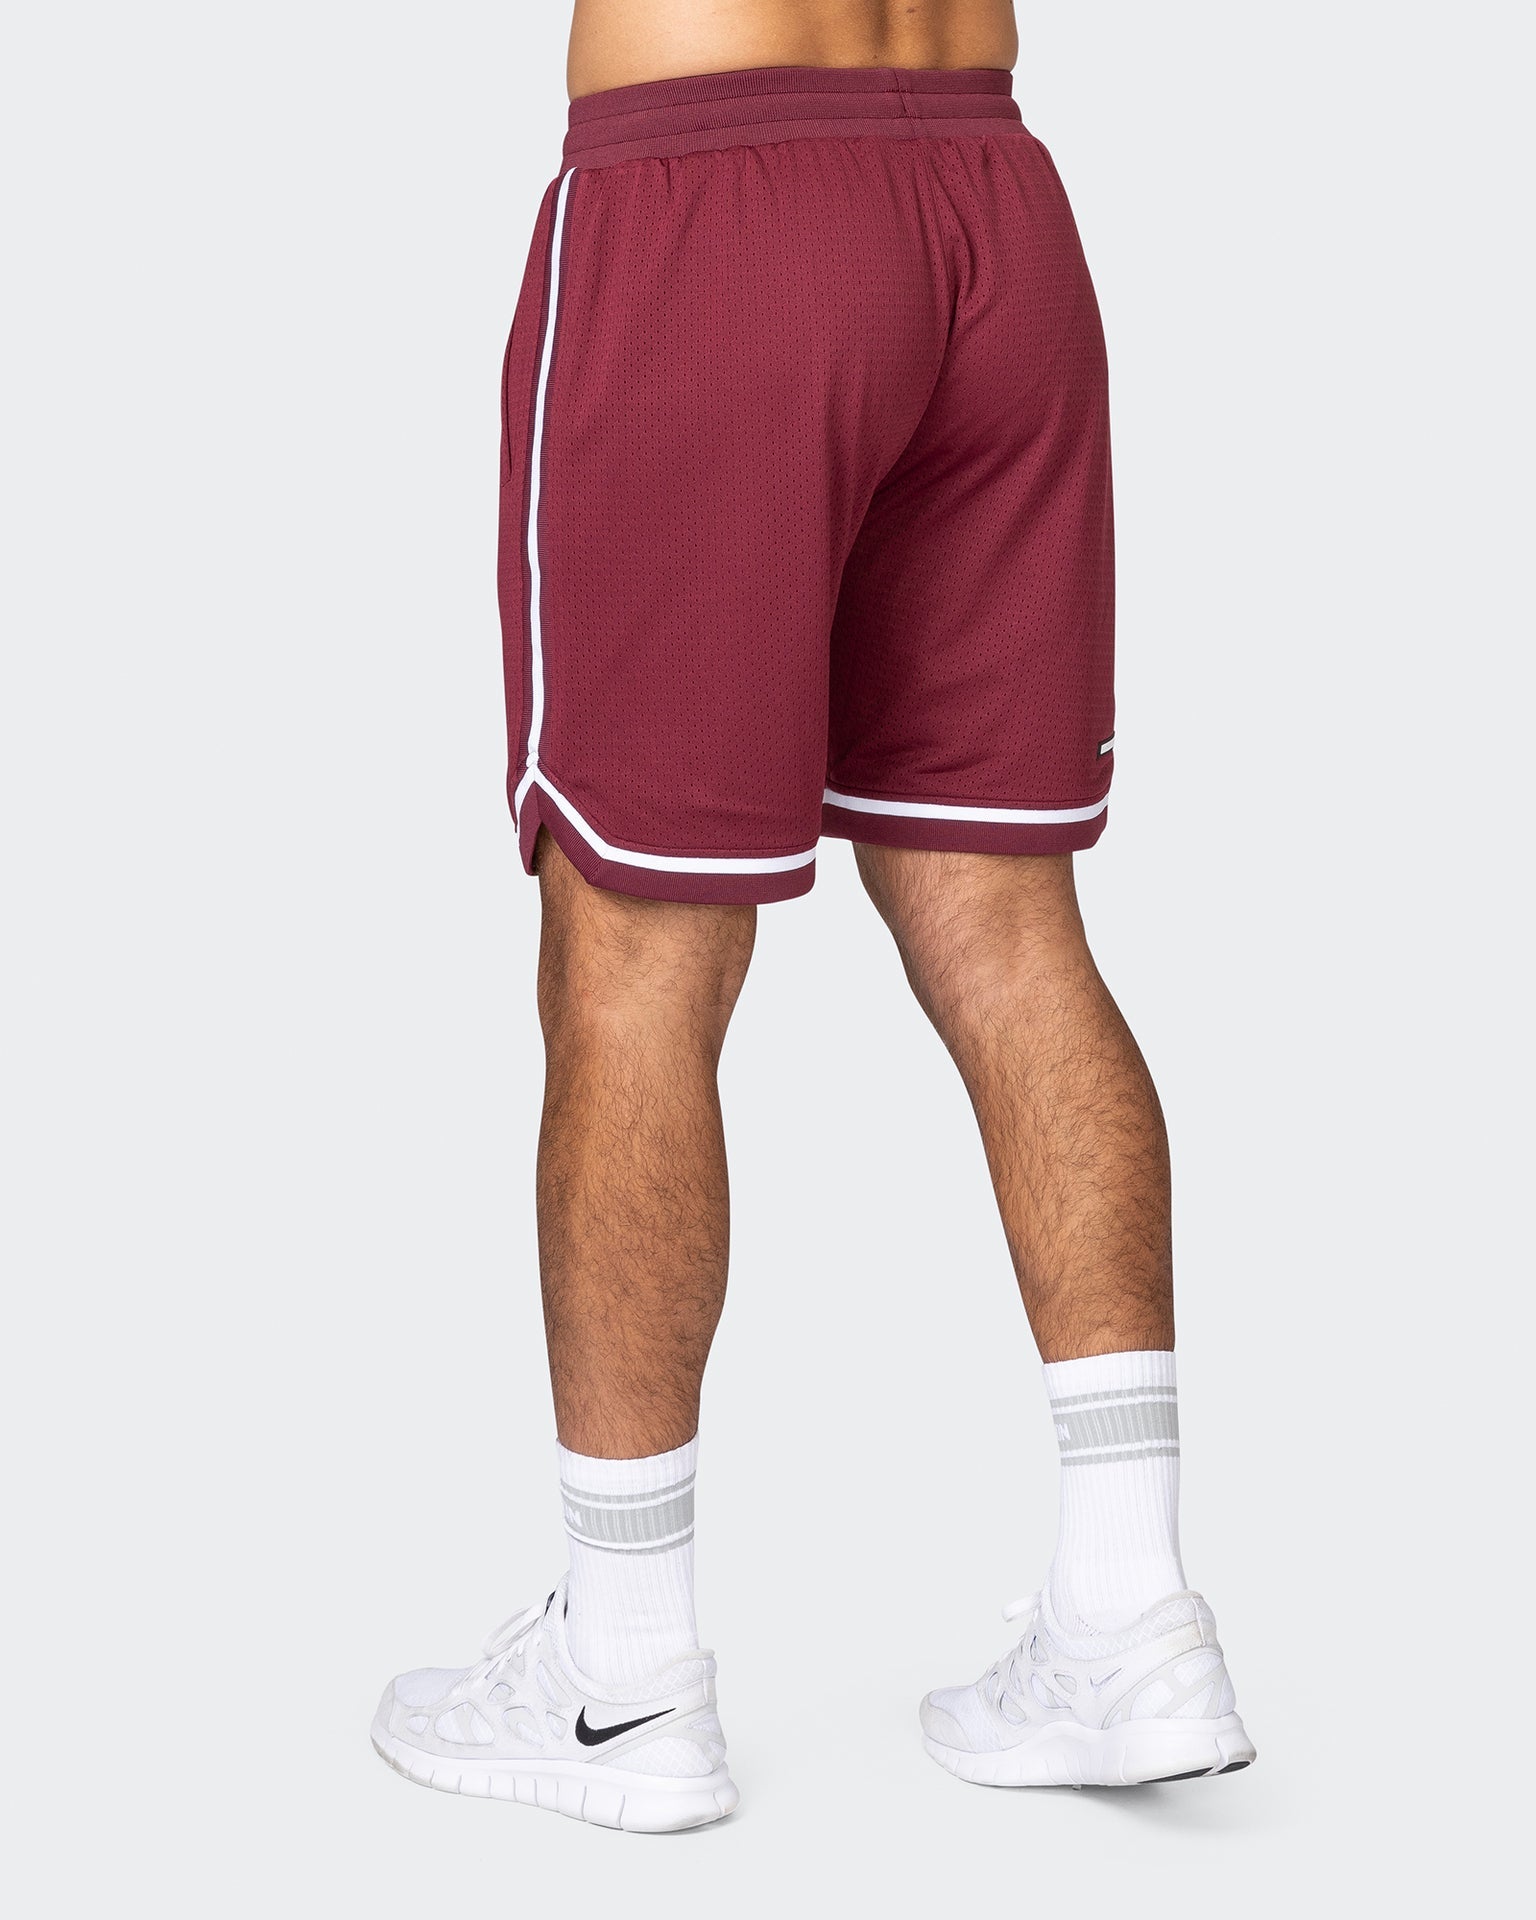 musclenation Gym Shorts Mens 8" Basketball Shorts - Wine